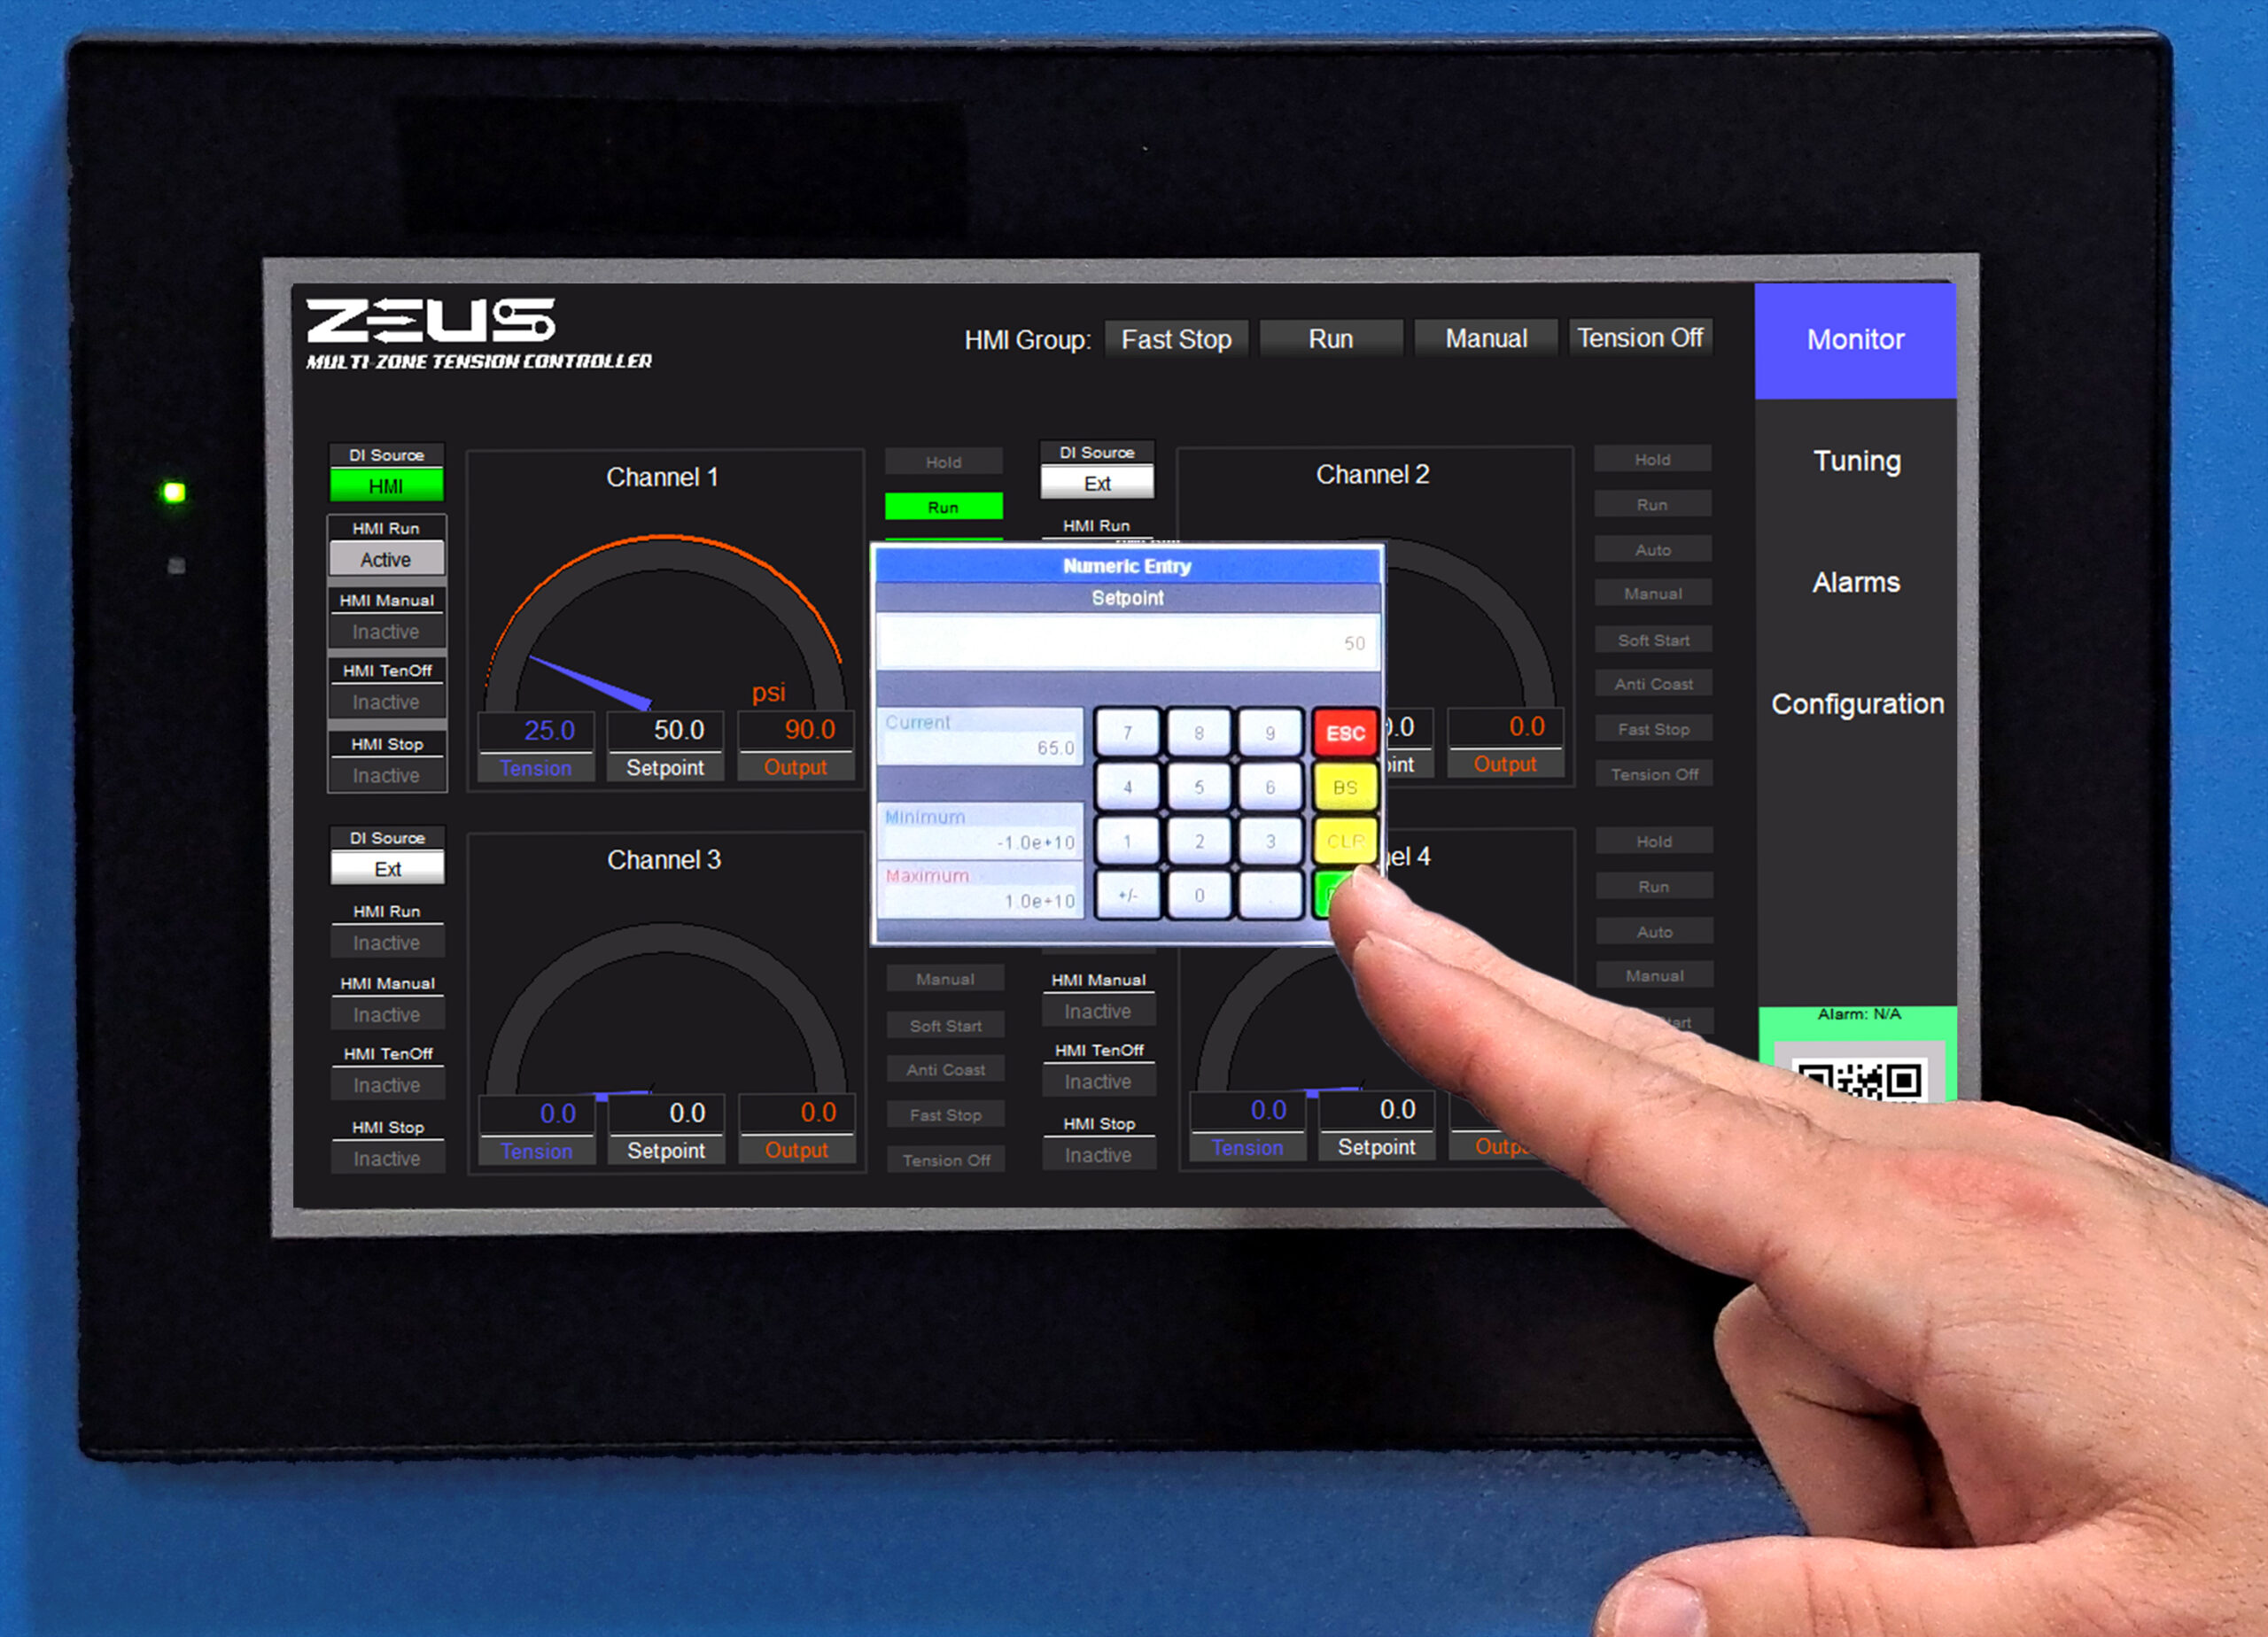 ZEUS Multi-Zone Tension Controller™